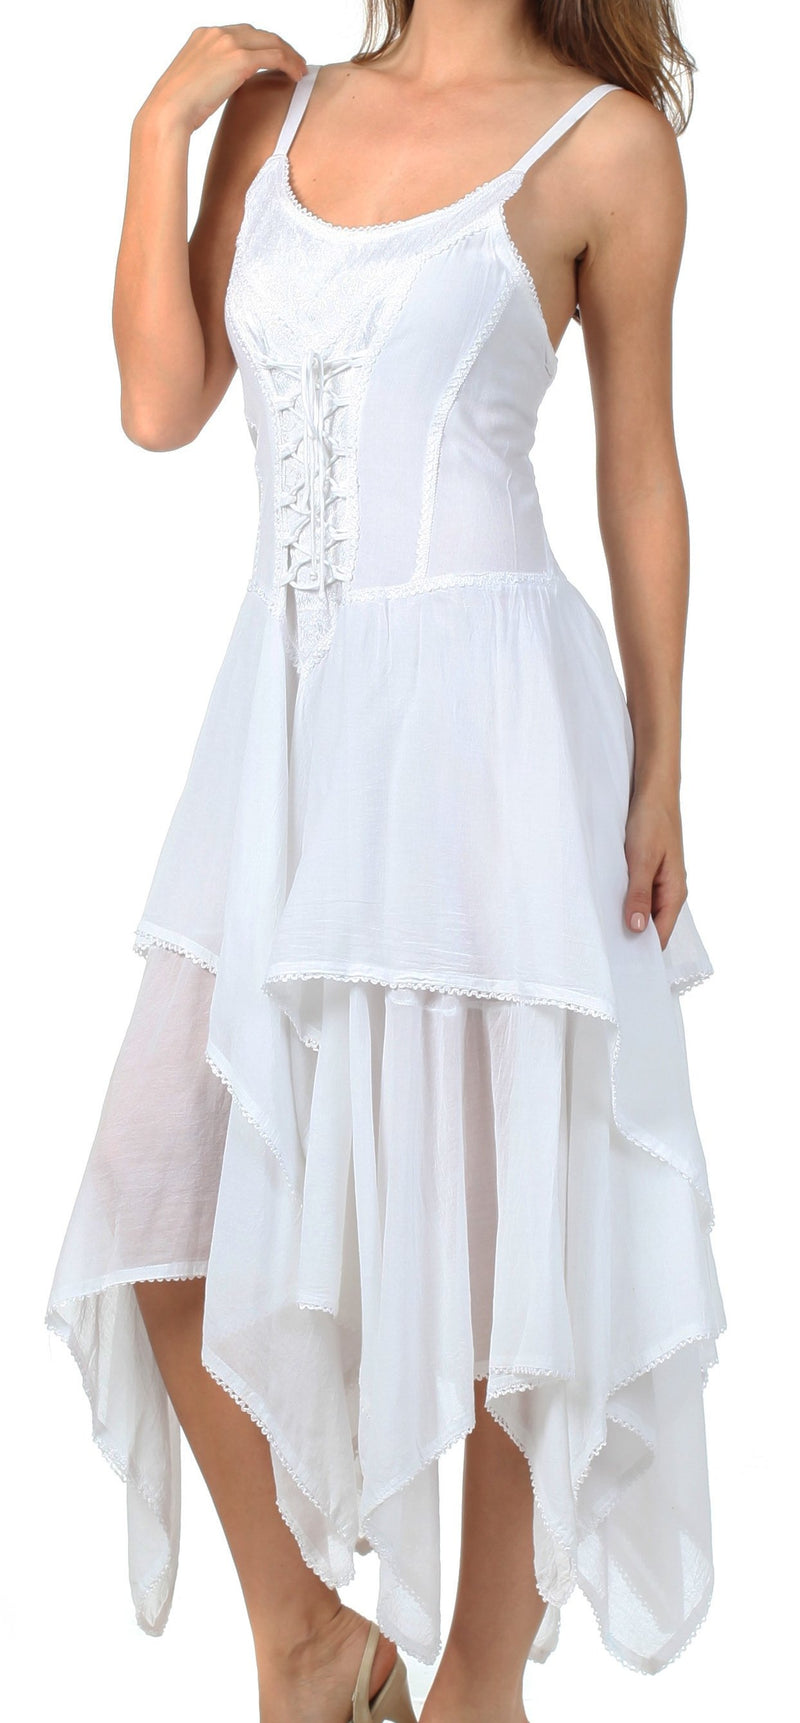 Sakkas Lady Mary Jacquard Corset Style Bodice Lightweight Handkerchief Hem Dress